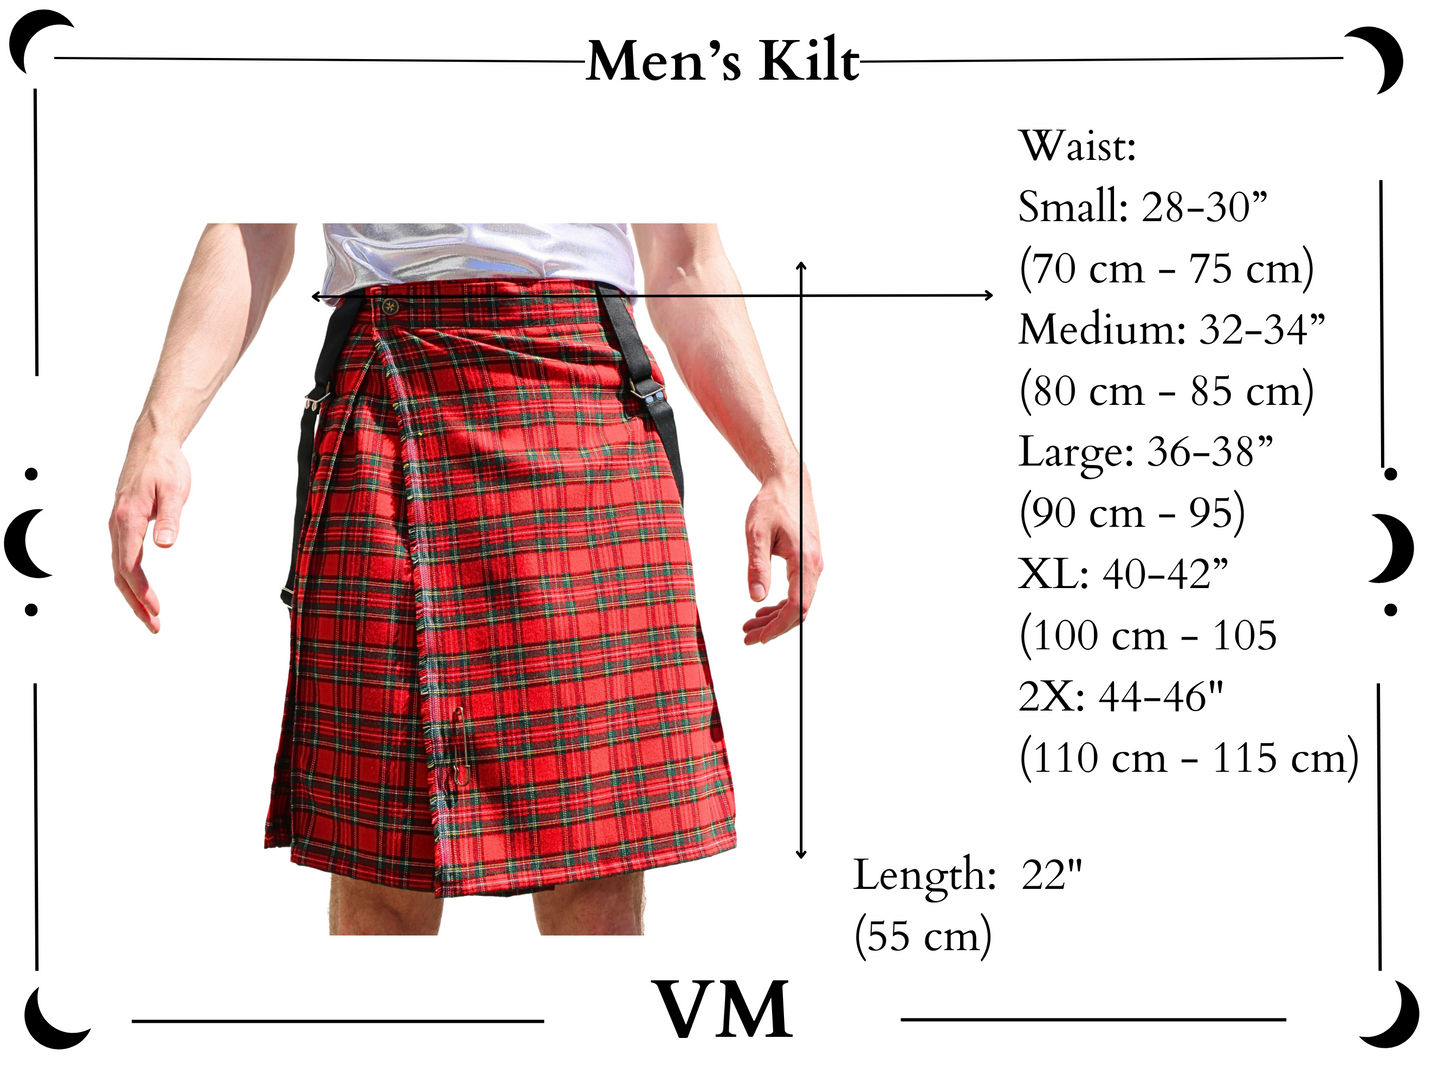 The VM Vegan Leather Kilt